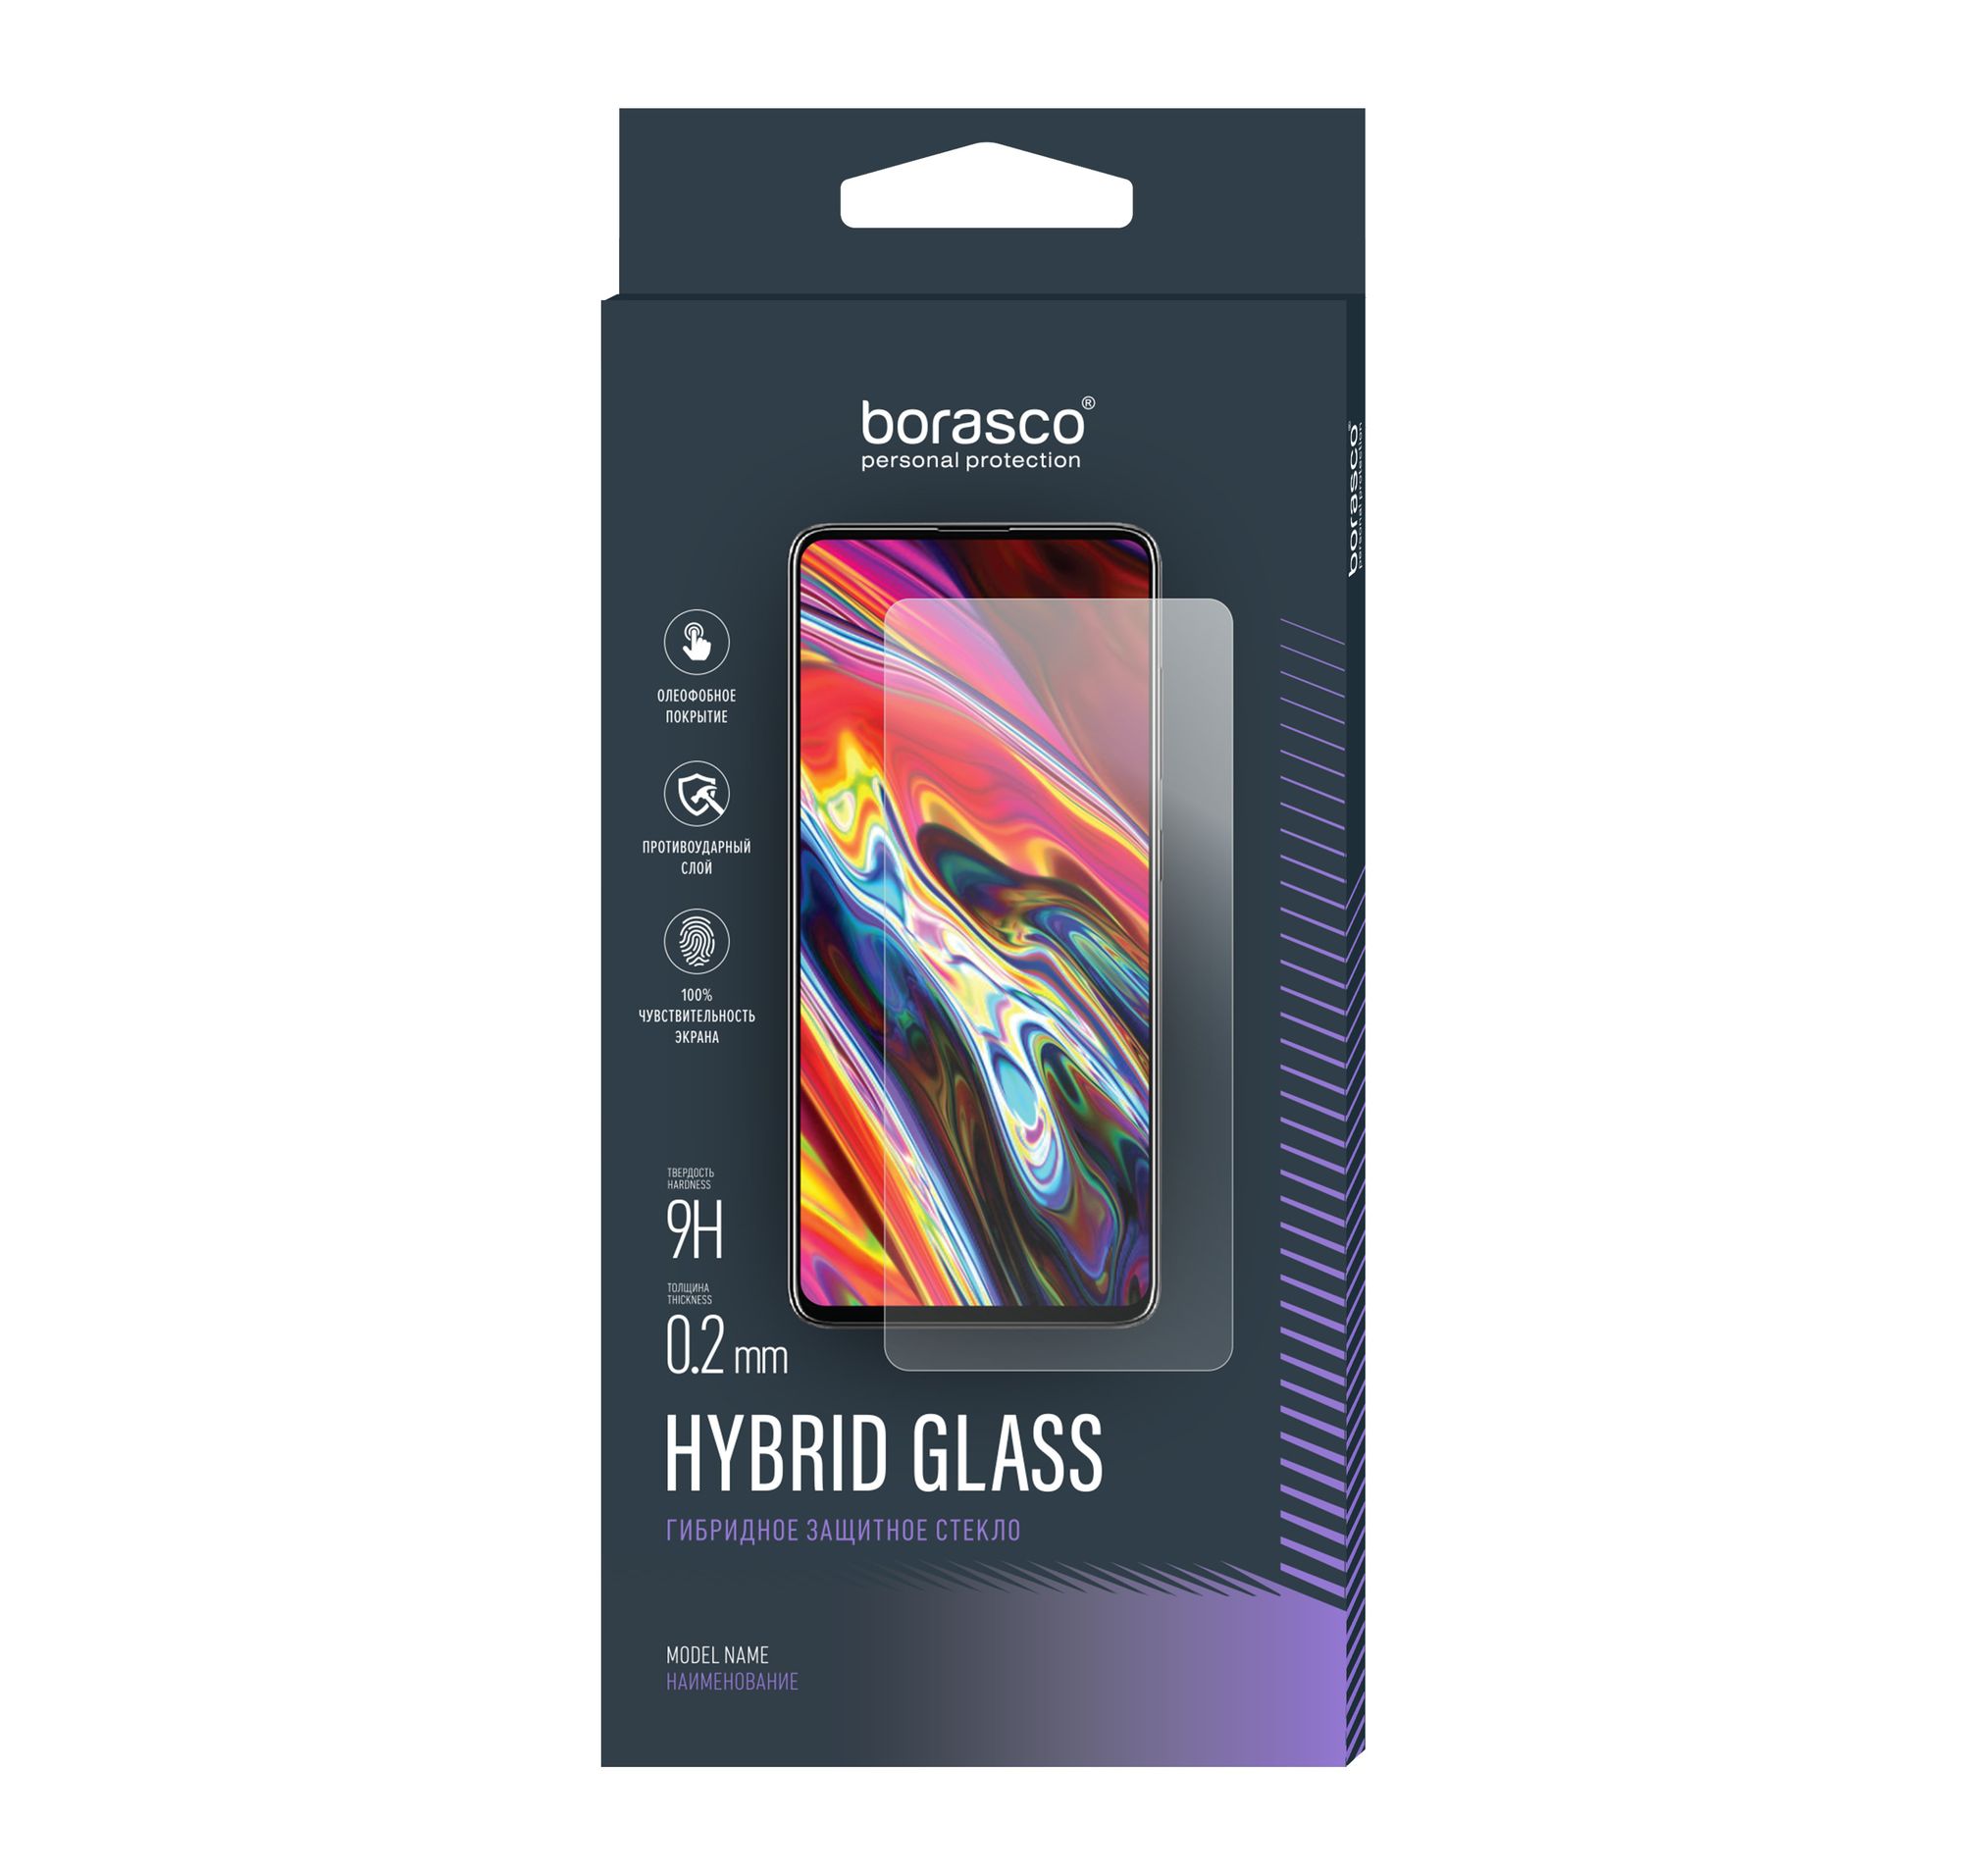 Стекло защитное Hybrid Glass VSP 0,26 мм для Sony Xperia XZ Premium Dual защитное стекло для htc desire 516 dual